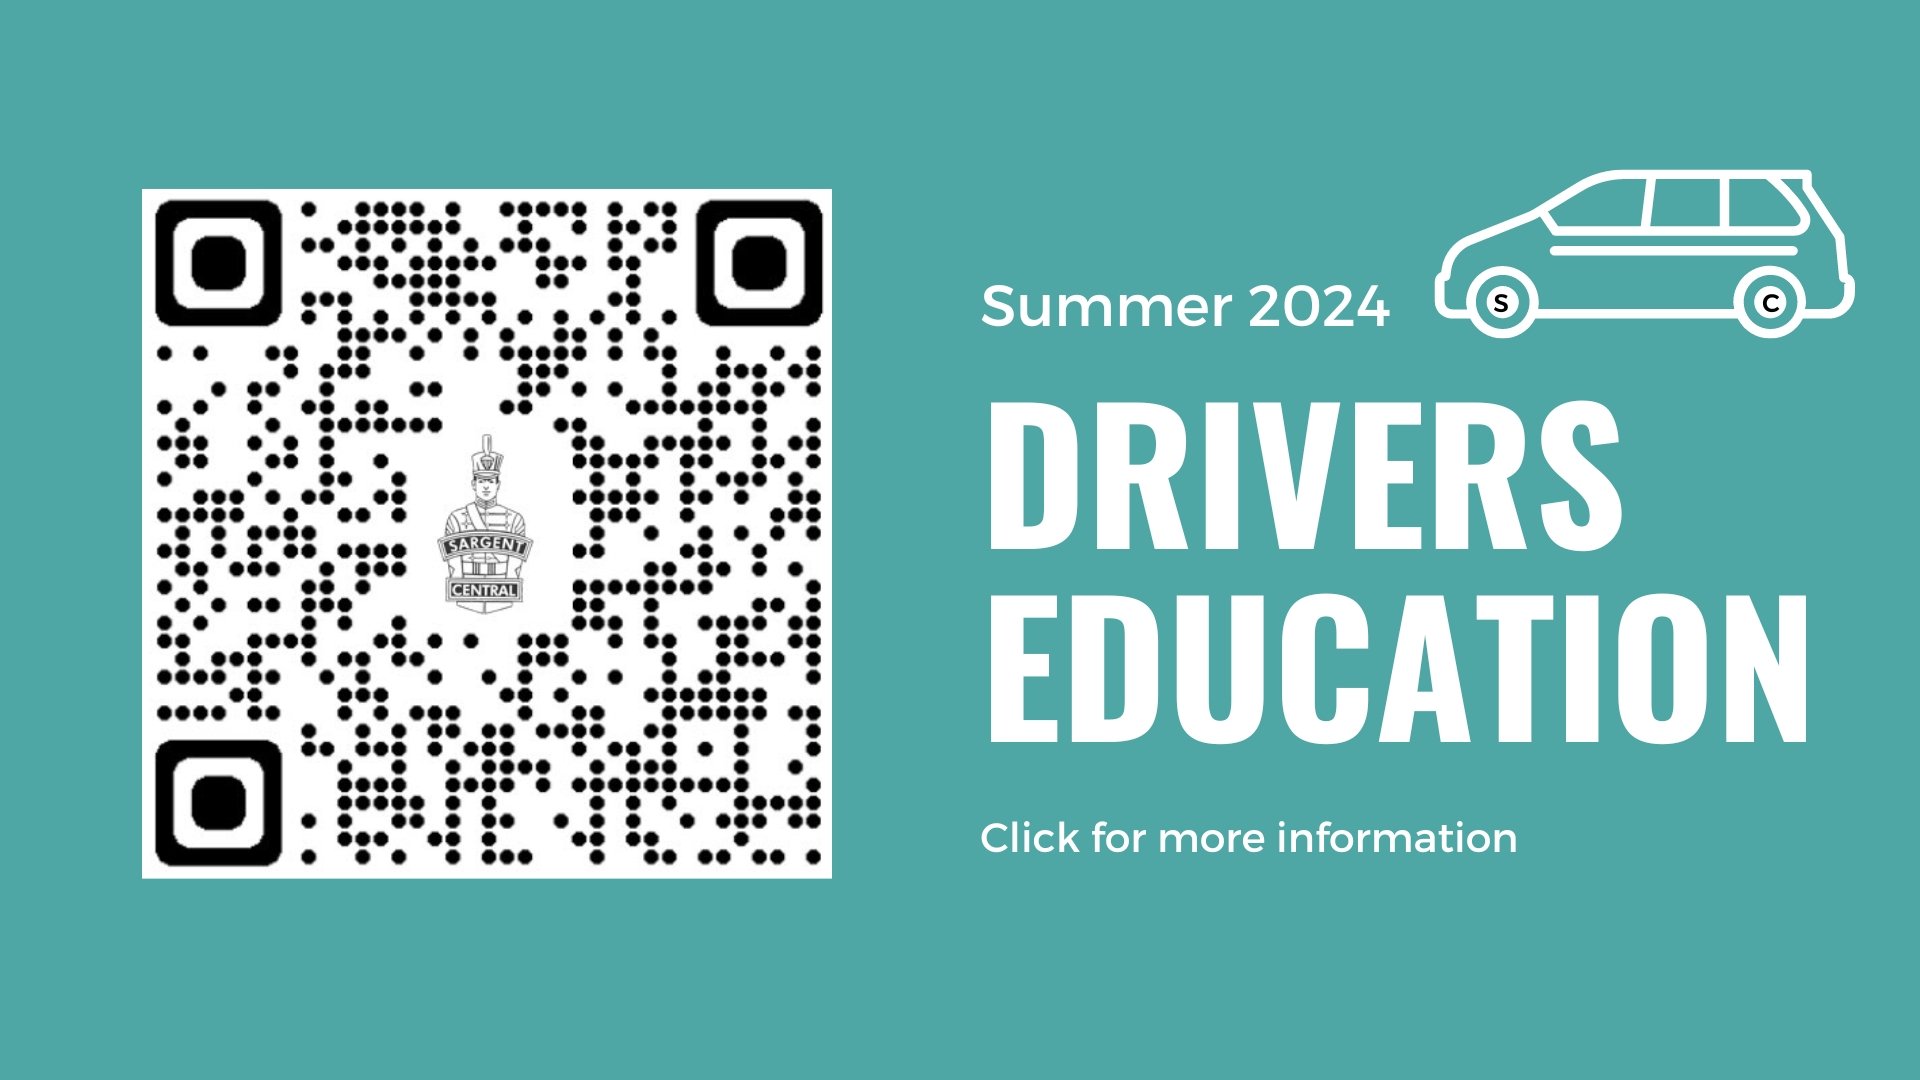 drivers education - summer 2024.jpg